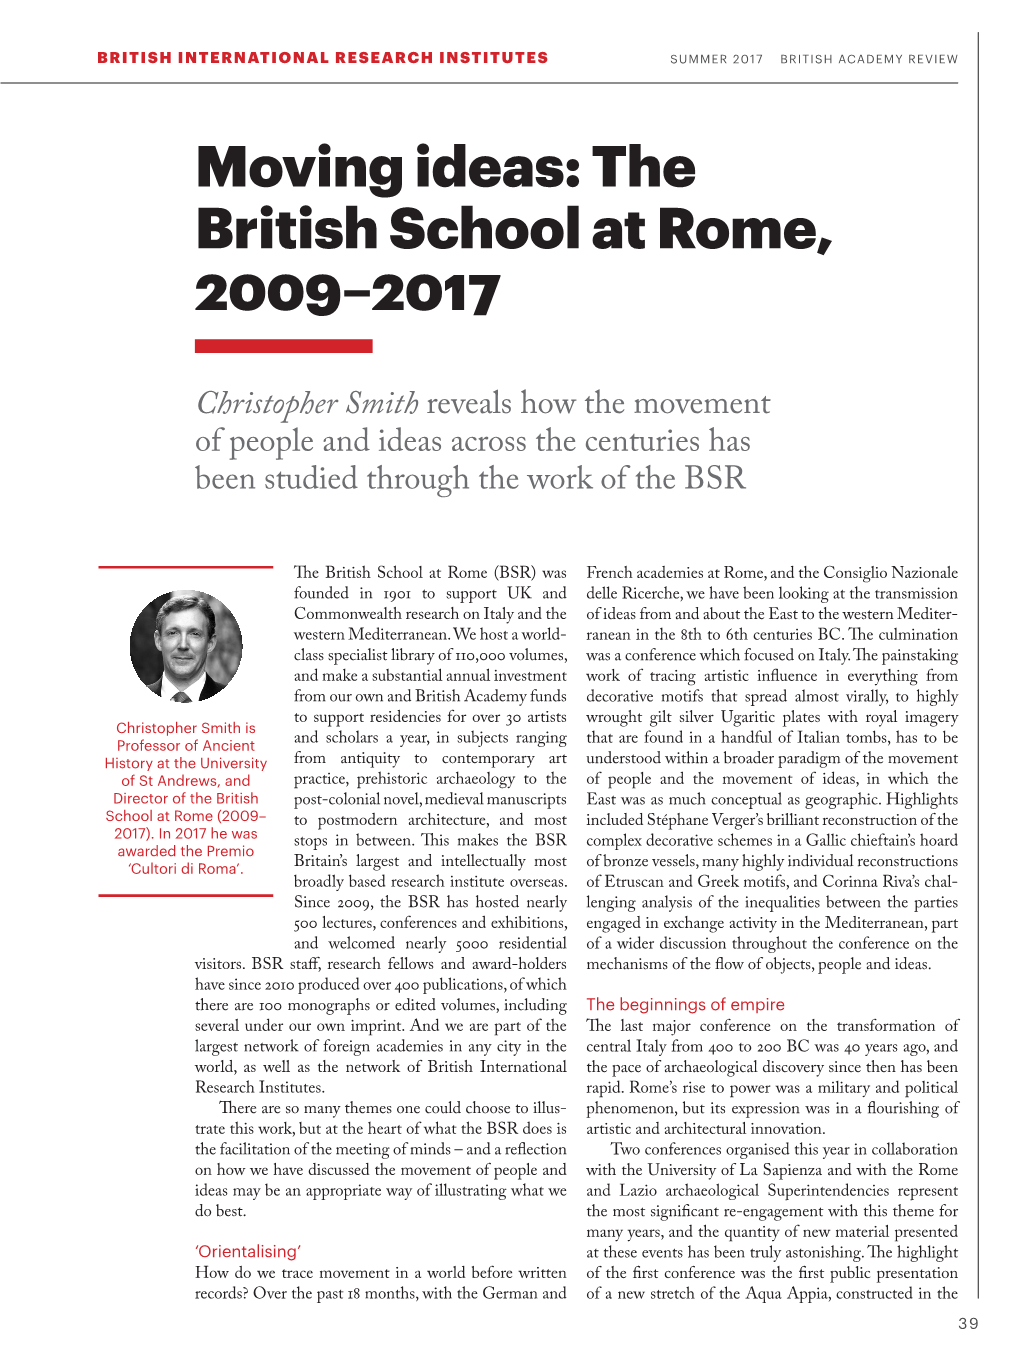 The British School at Rome, 2009–2017